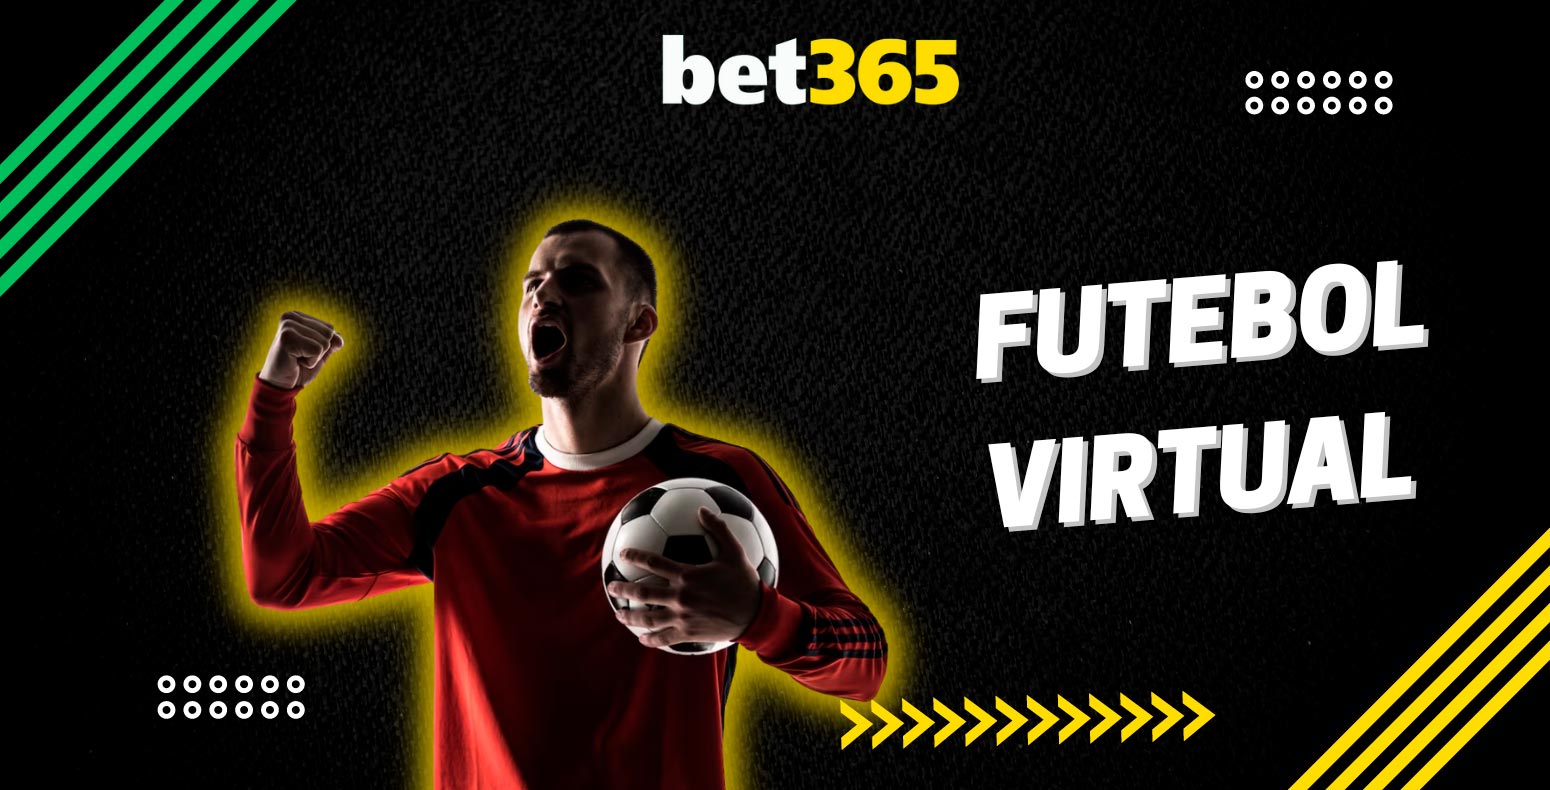 Futebol virtual na Bet365